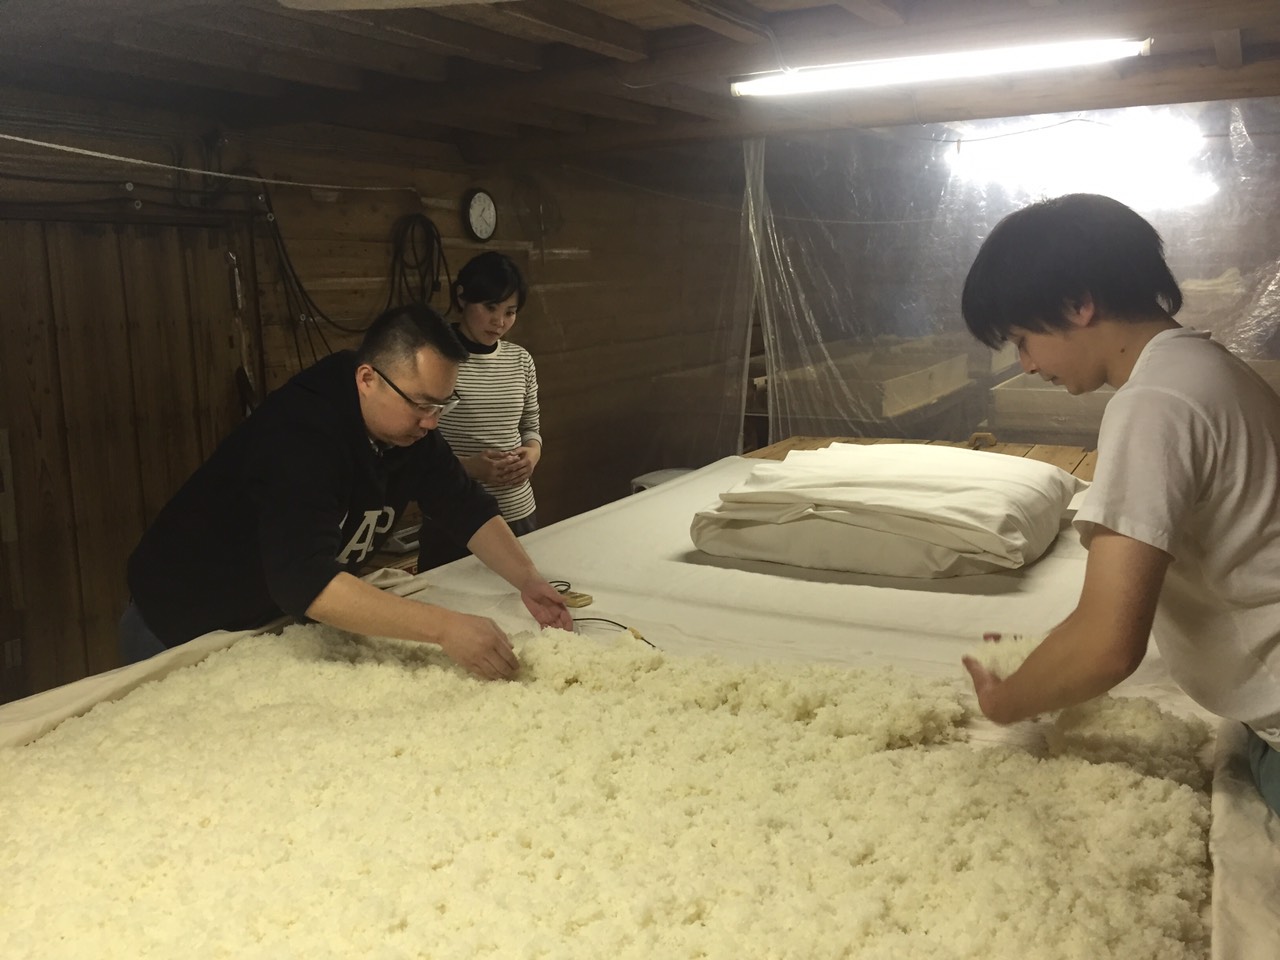 Traditional handmade sake process